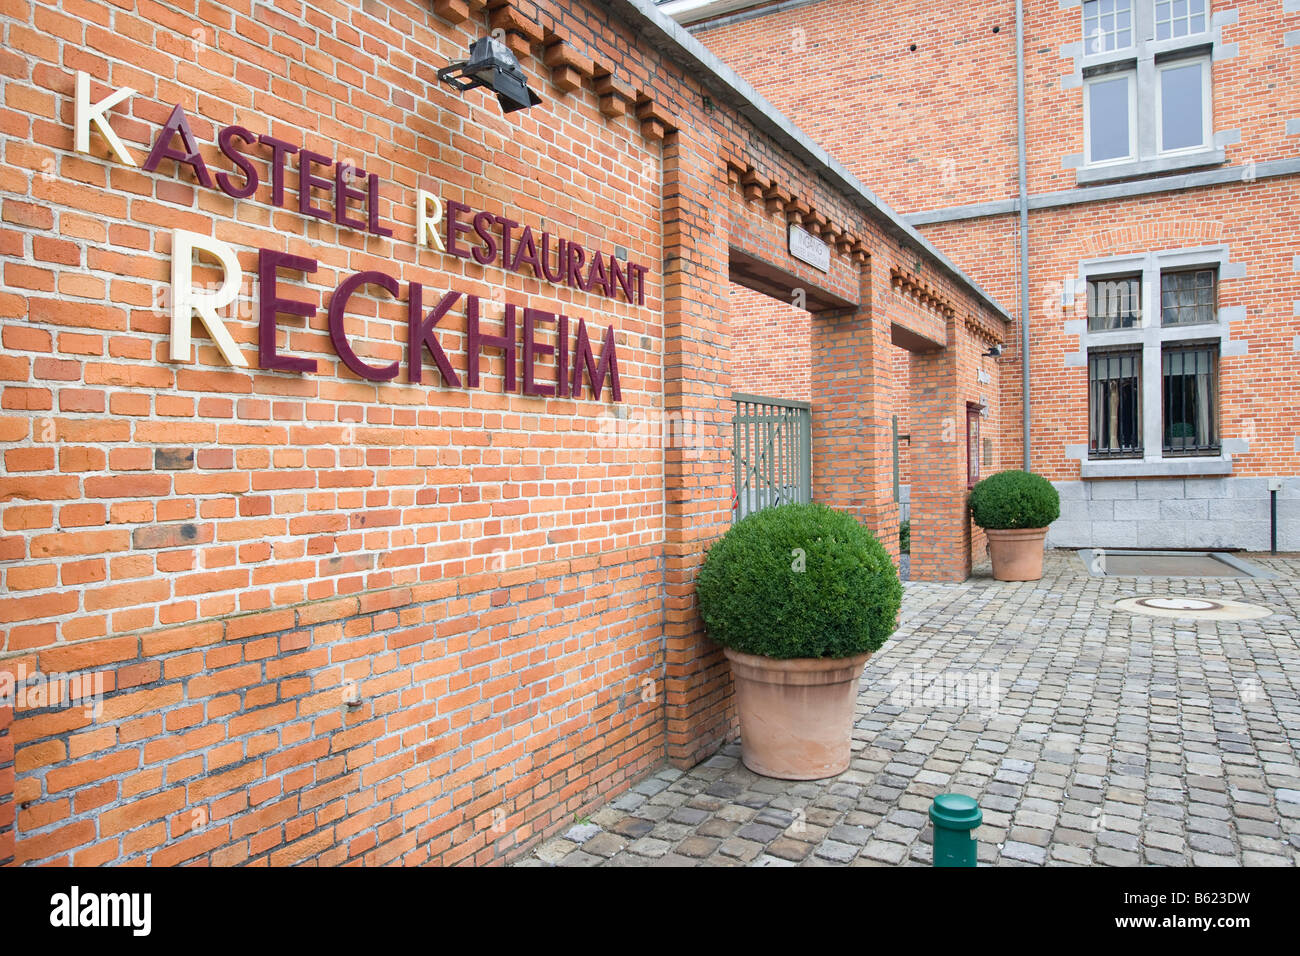 Kasteel Reckheim, Lanaken, Province of Limburg, Belgium, Europe Stock Photo